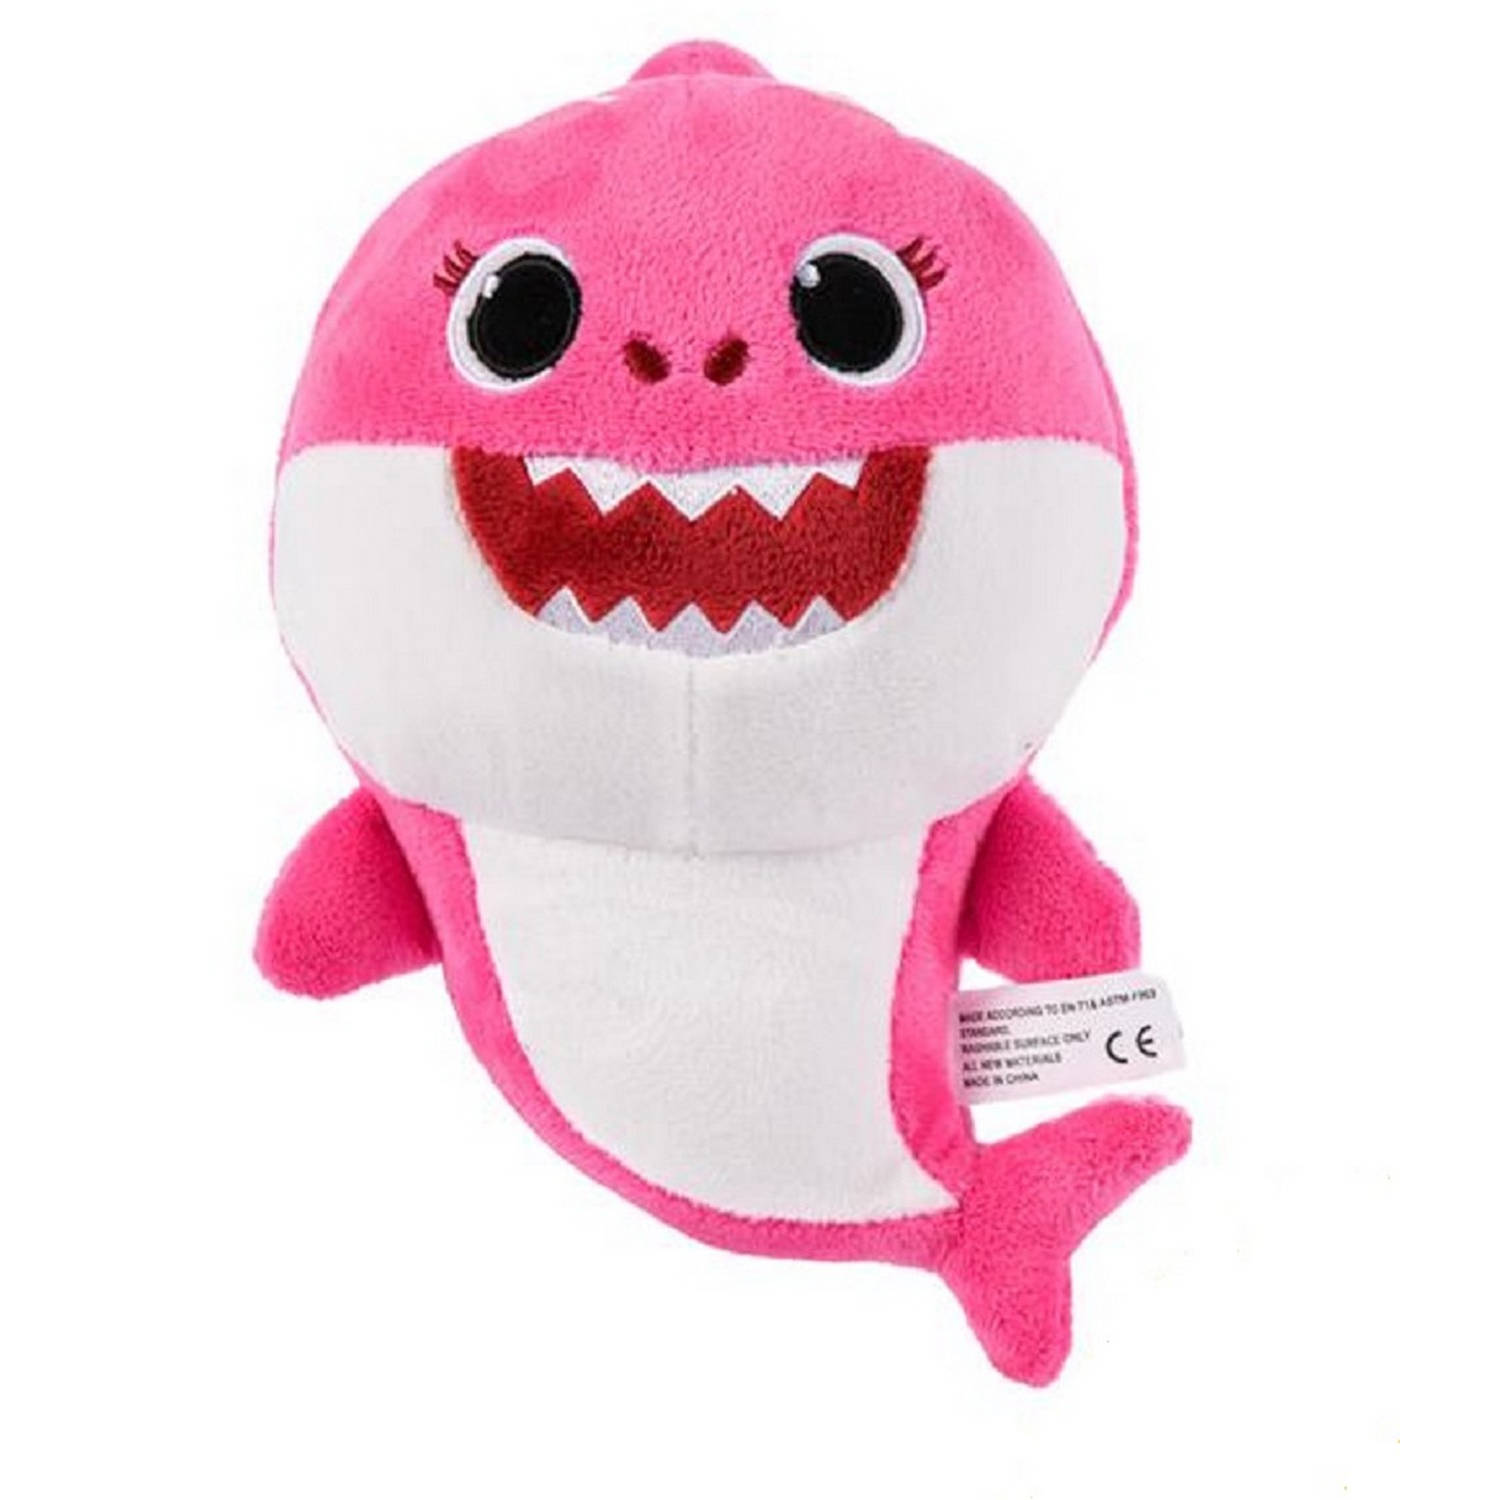 Baby Shark pluche knuffel roze karakter mommy 15 cm - Kinder speelgoed dieren